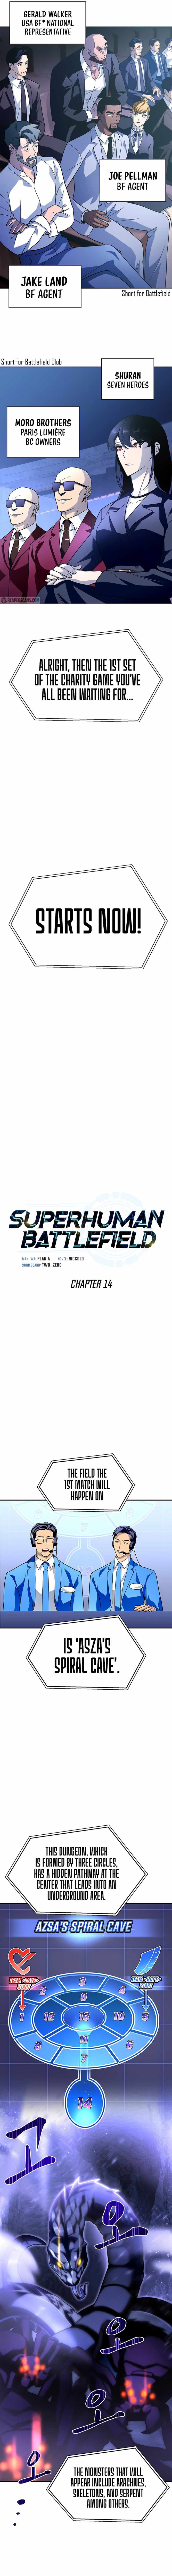 Superhuman Battlefield - Page 3